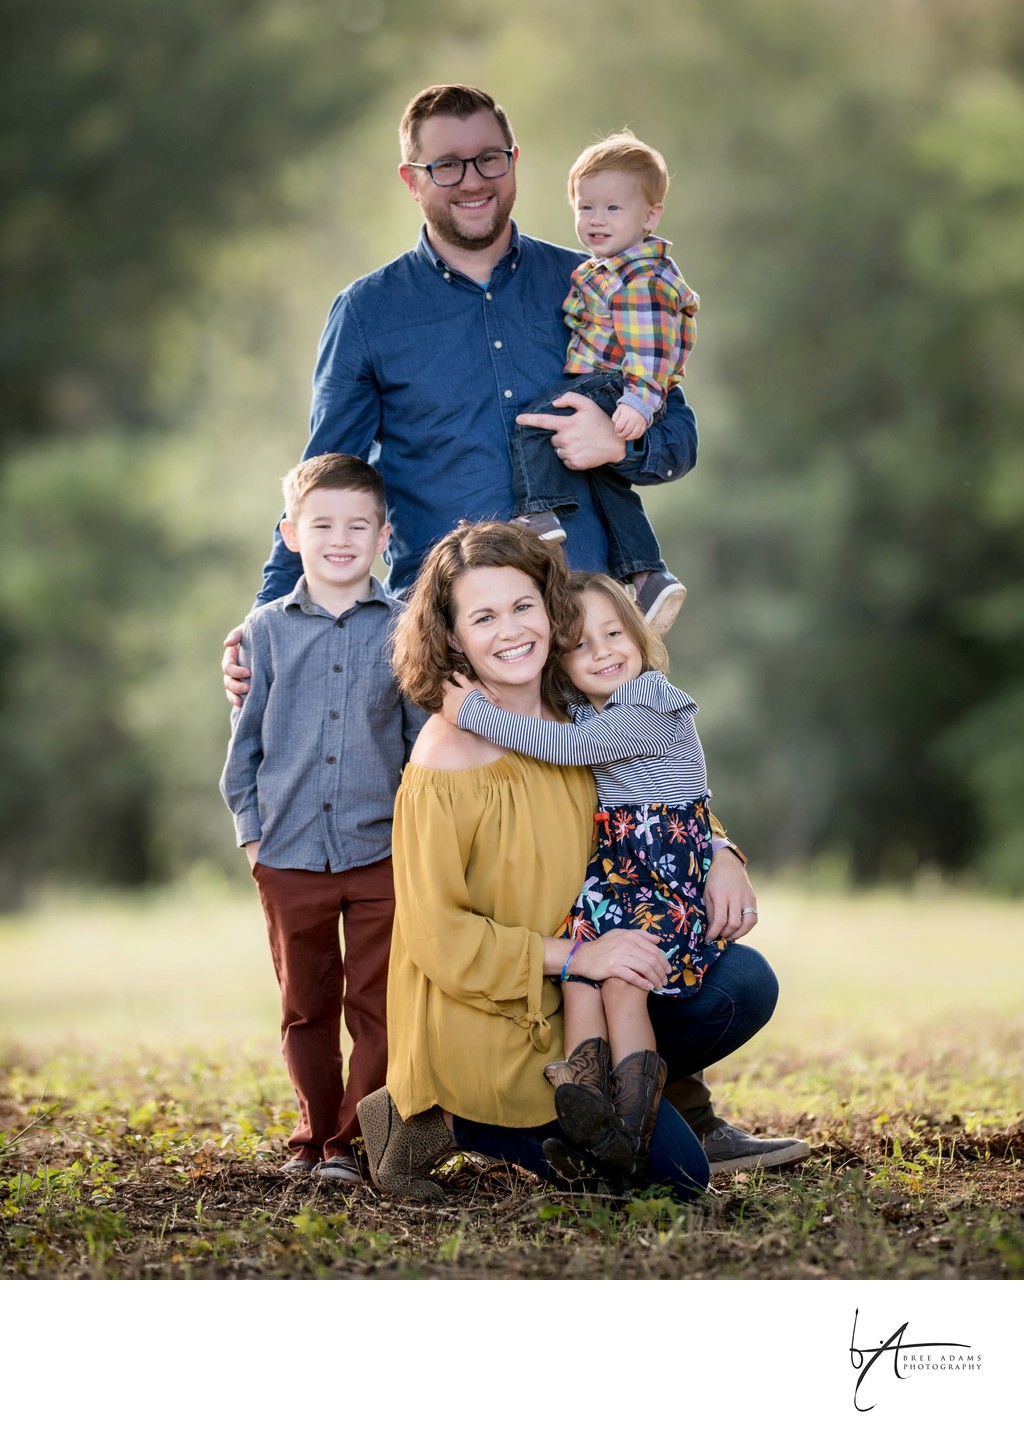 Family adoption photo sessions